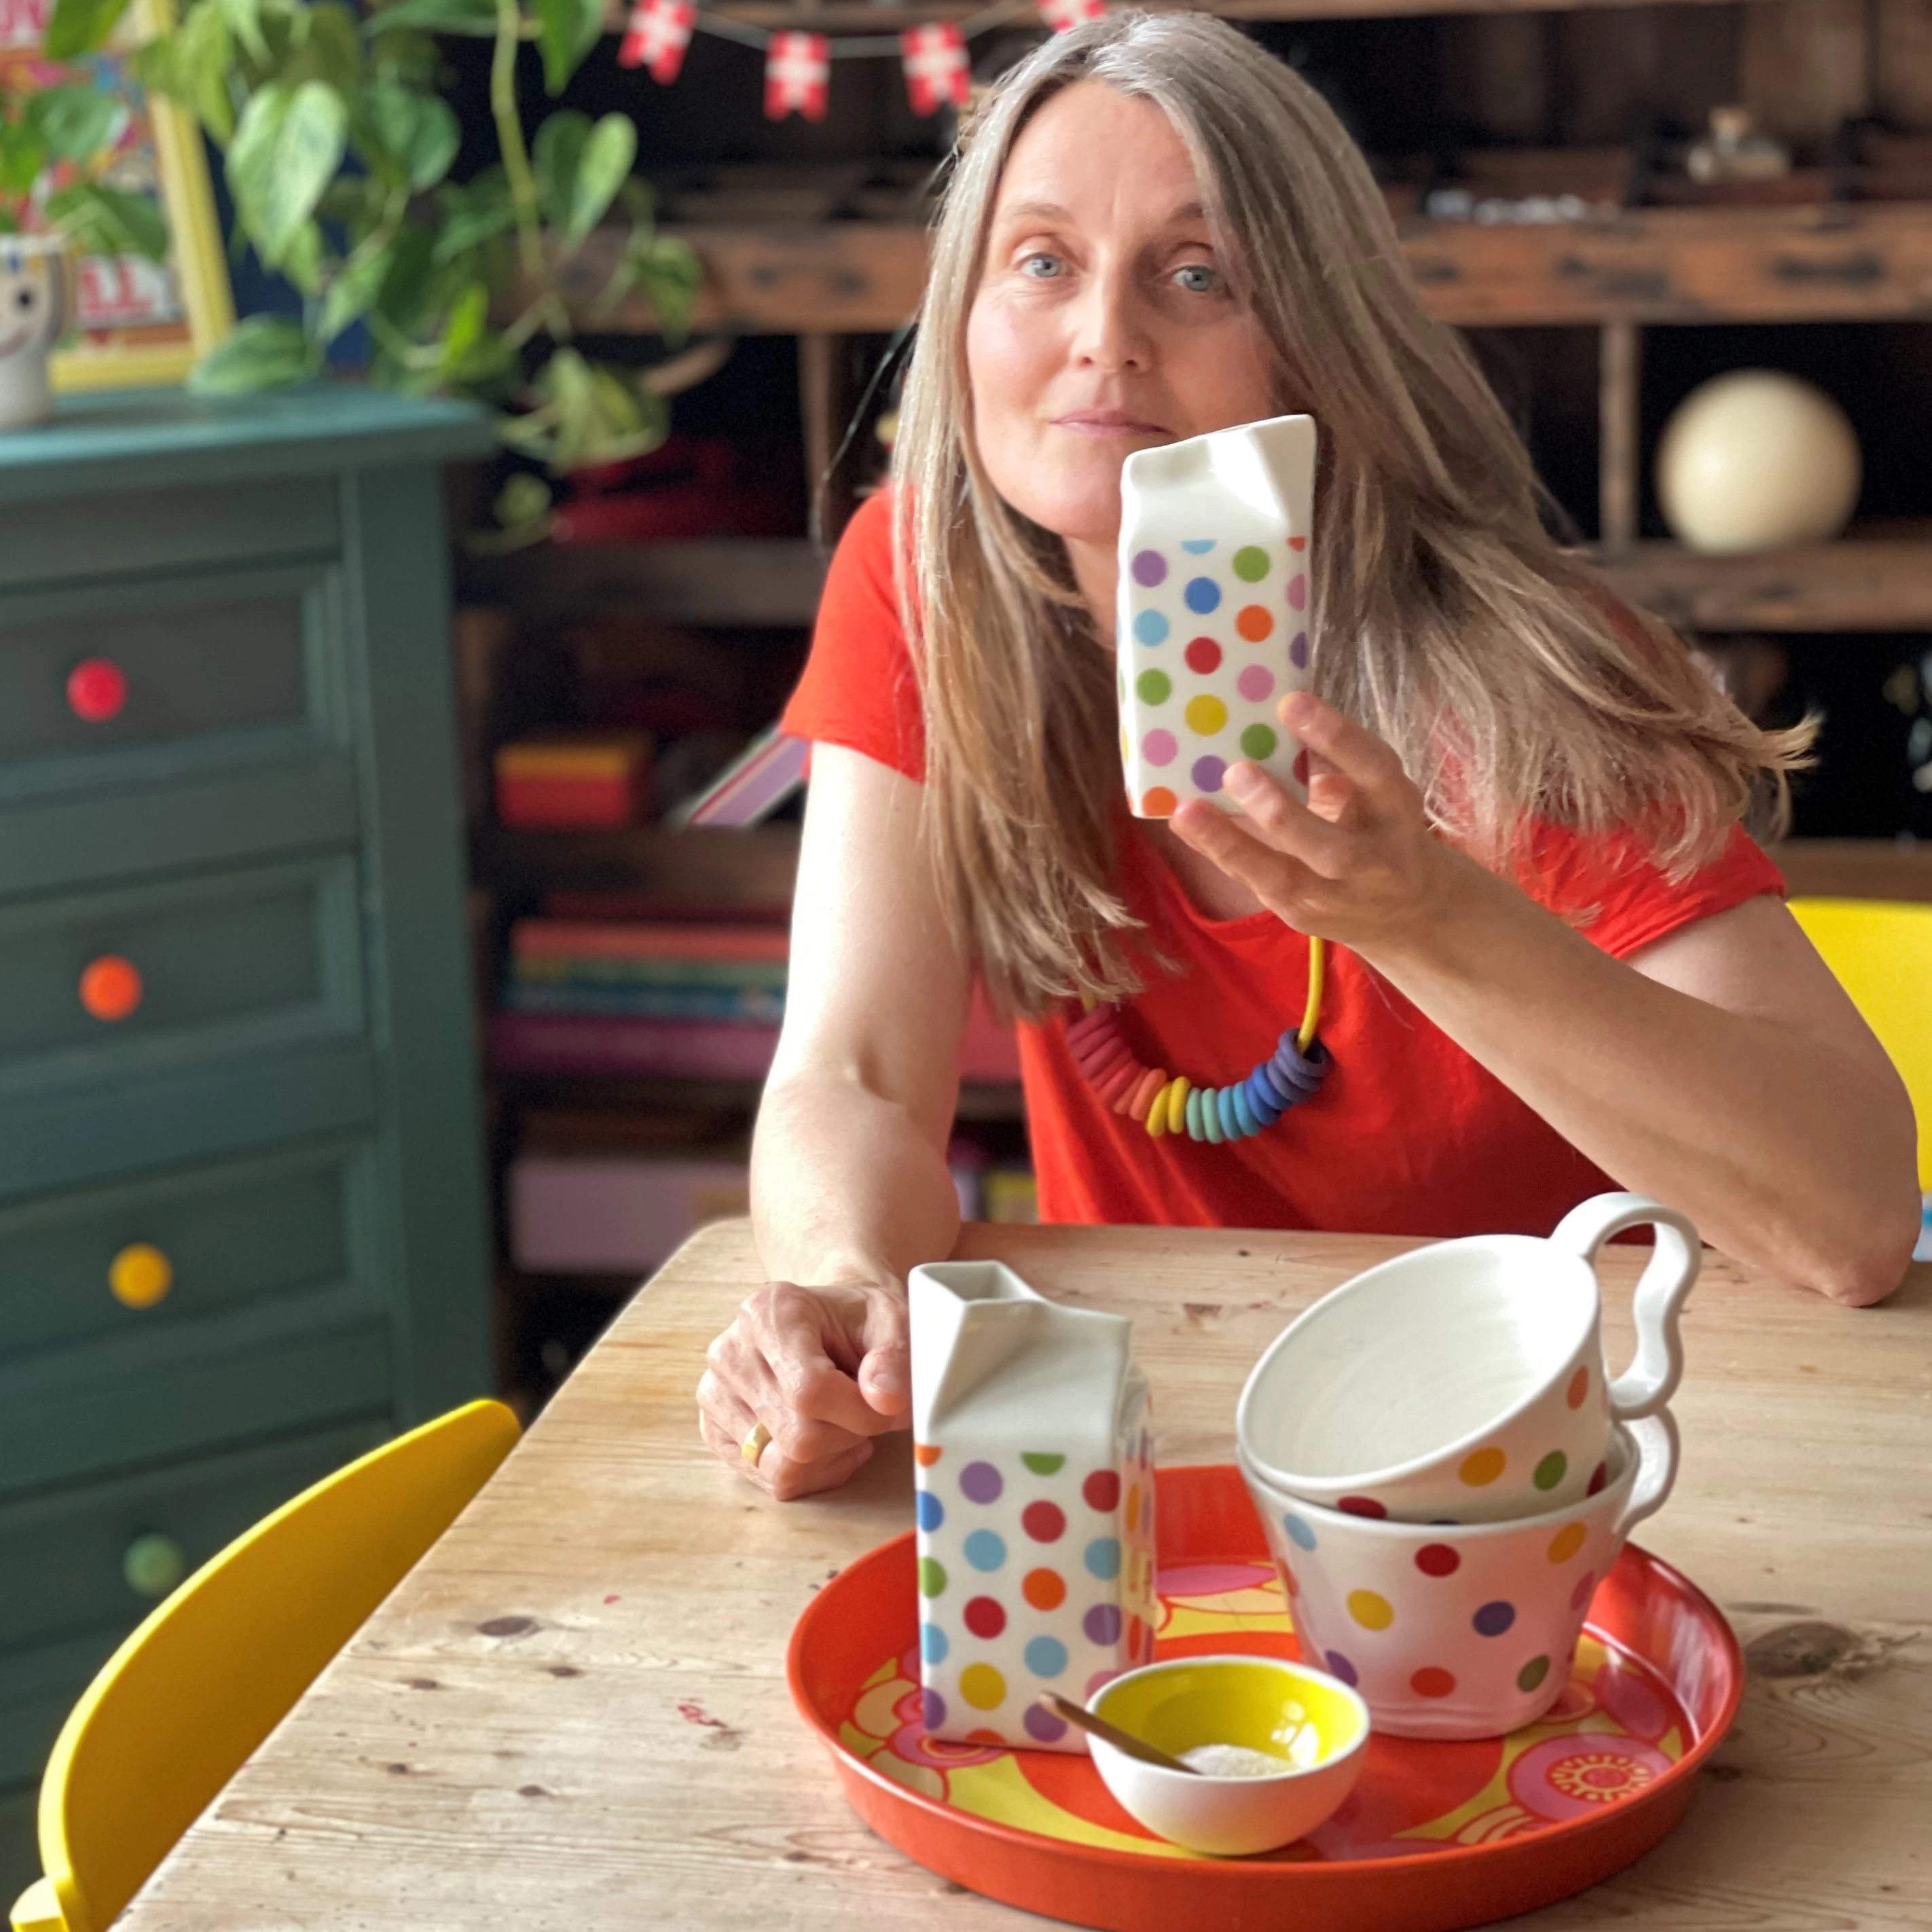 Hanne Rysgaard in her studio holding a polkadot milkcarton jug